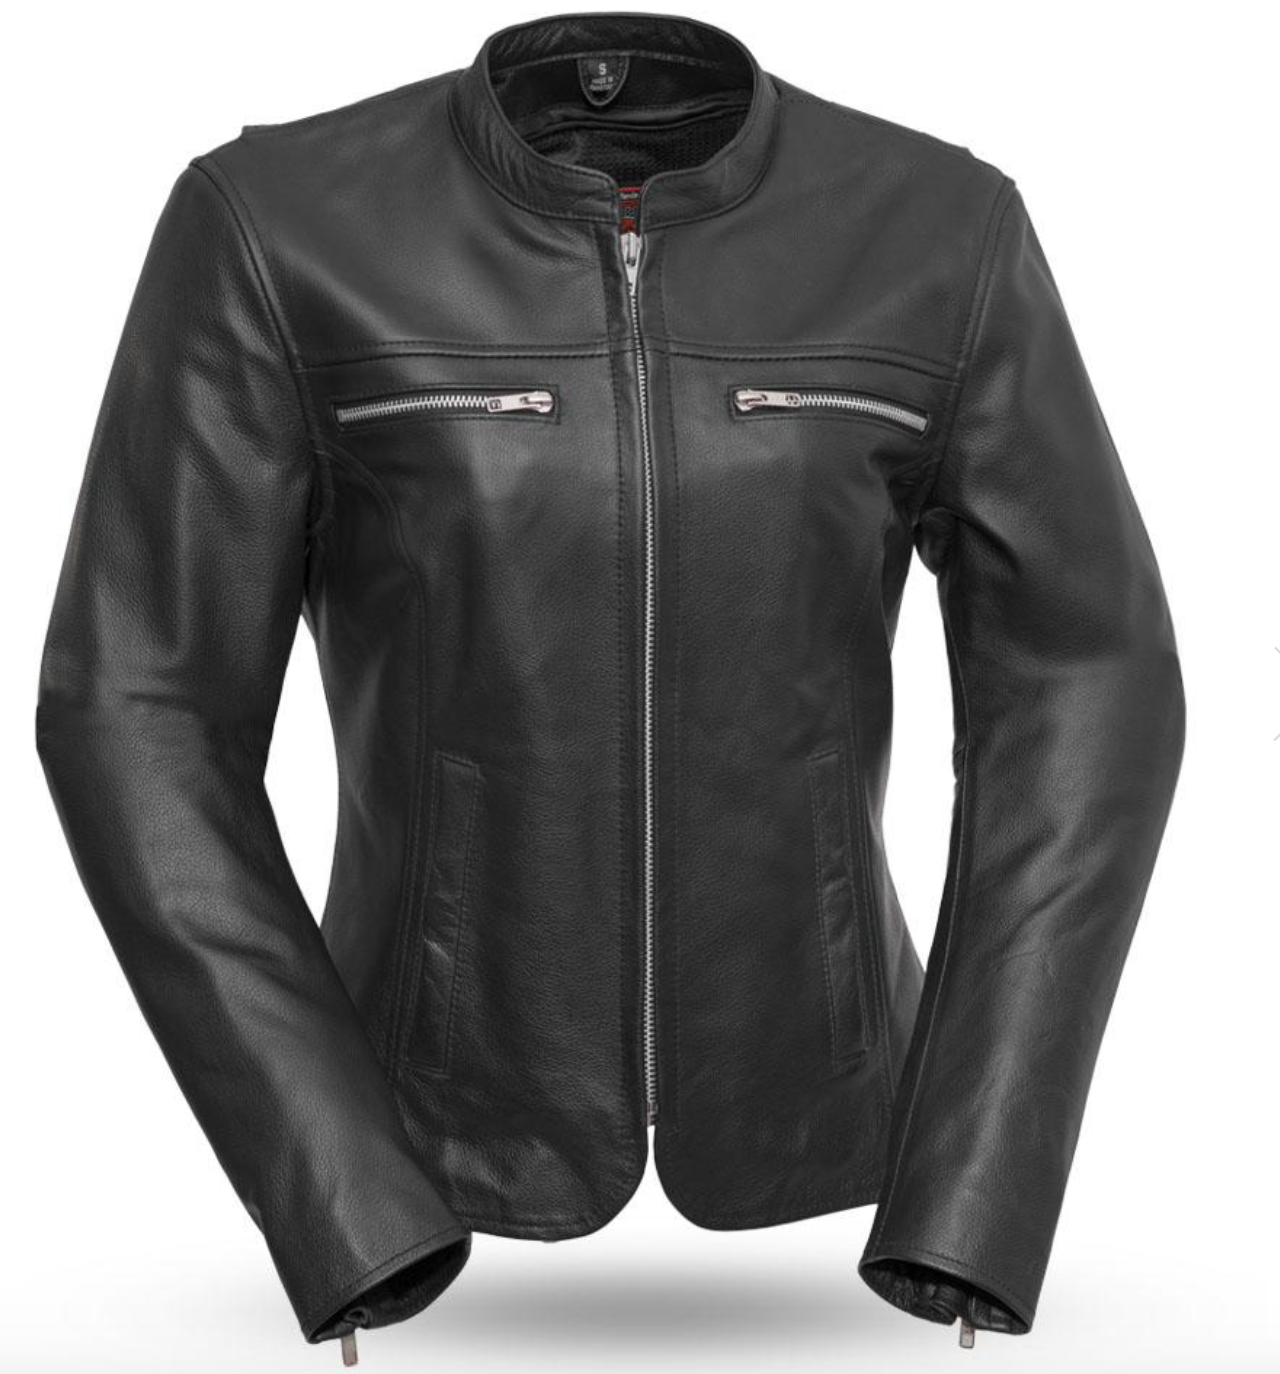 Roxy - Light weight cafe style leather jacket